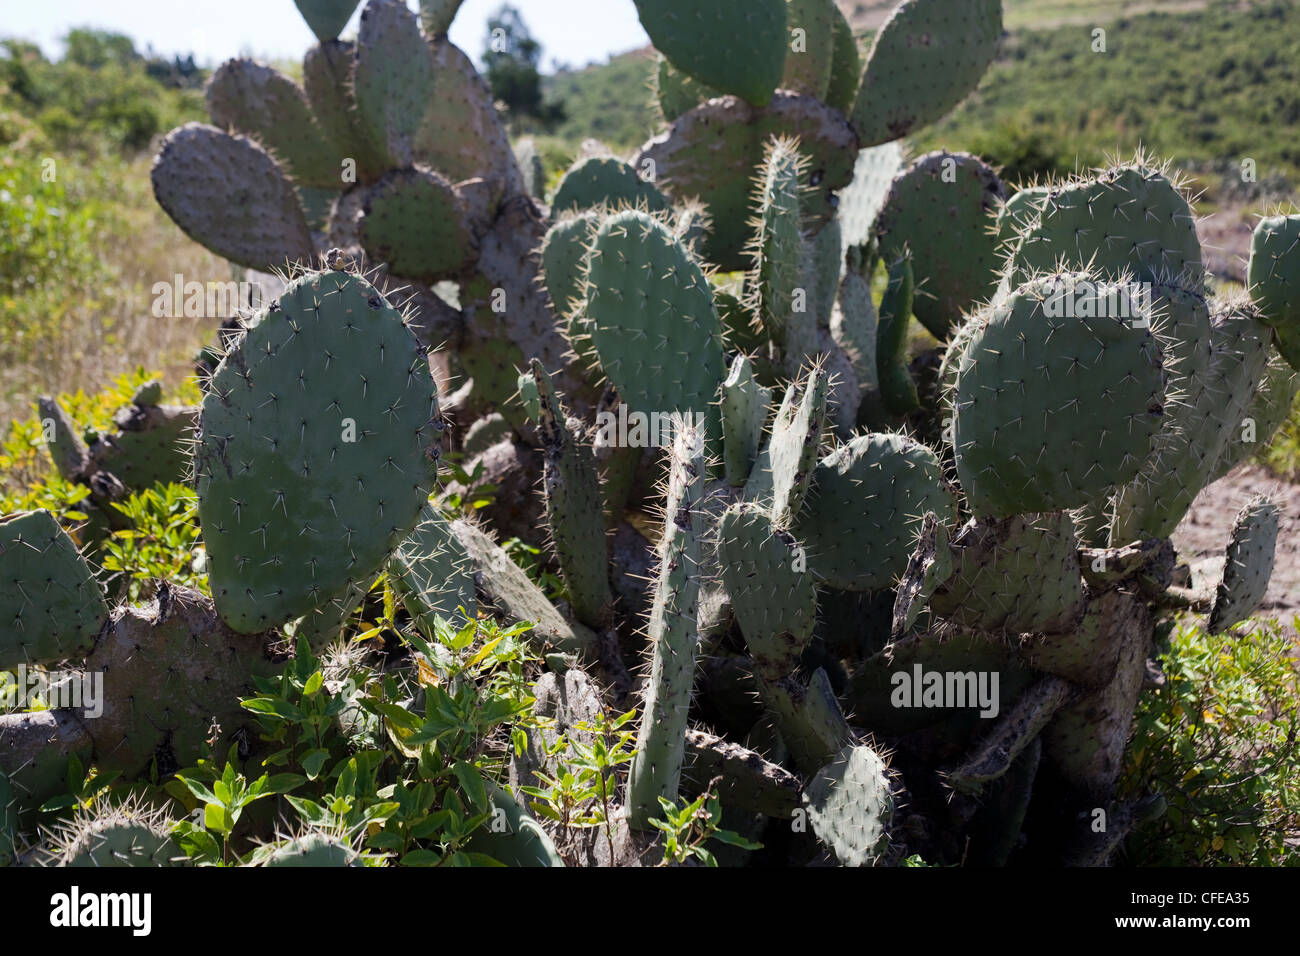 Cactus (Opuntia sp. ). Long established introduction. Here at Debre Libanos. Ethiopia. Stock Photo